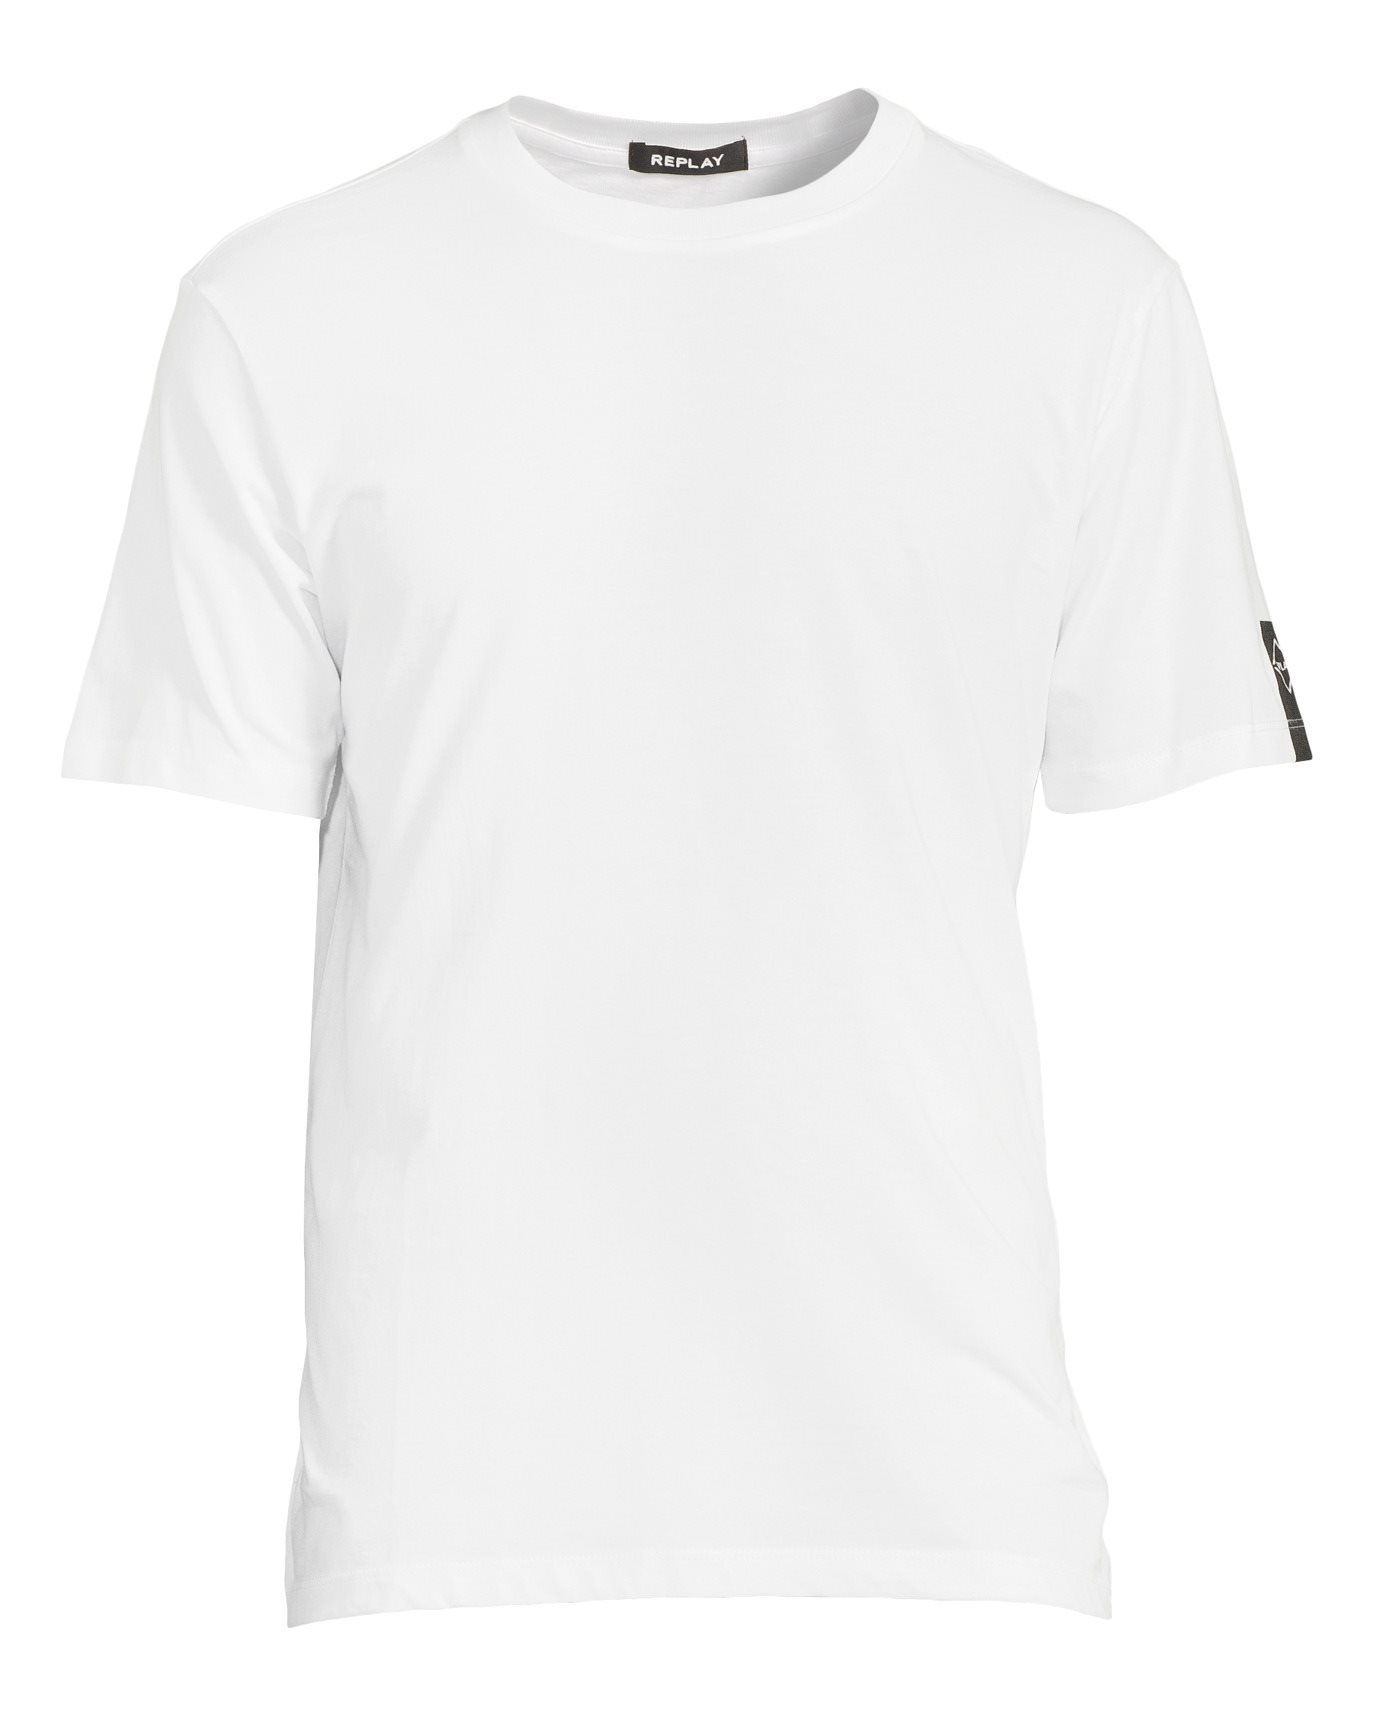 Replay - T-shirt basic print white | NK